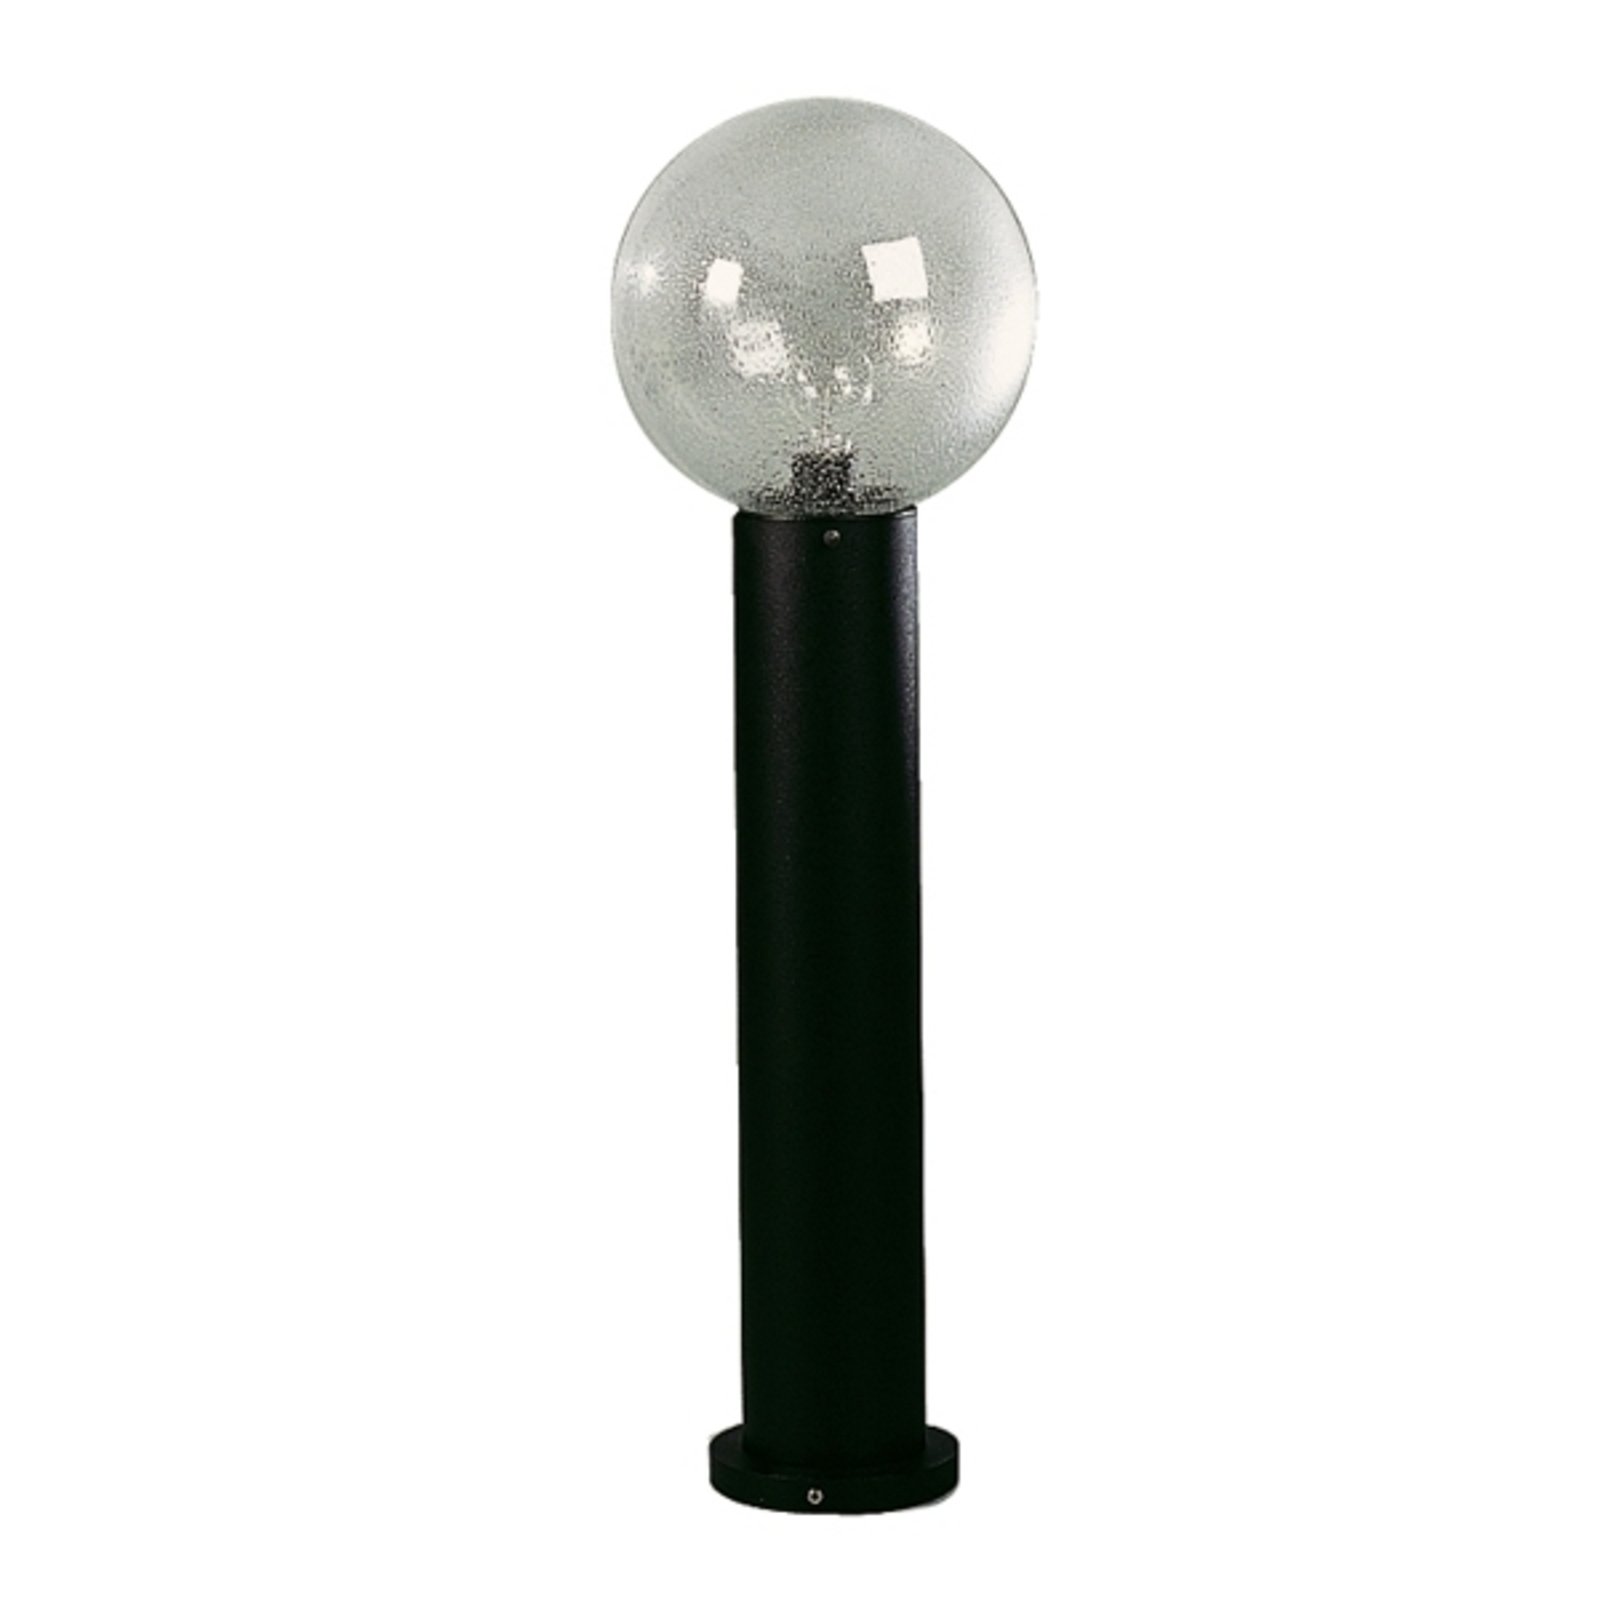 Bollard light with bubble glass, black